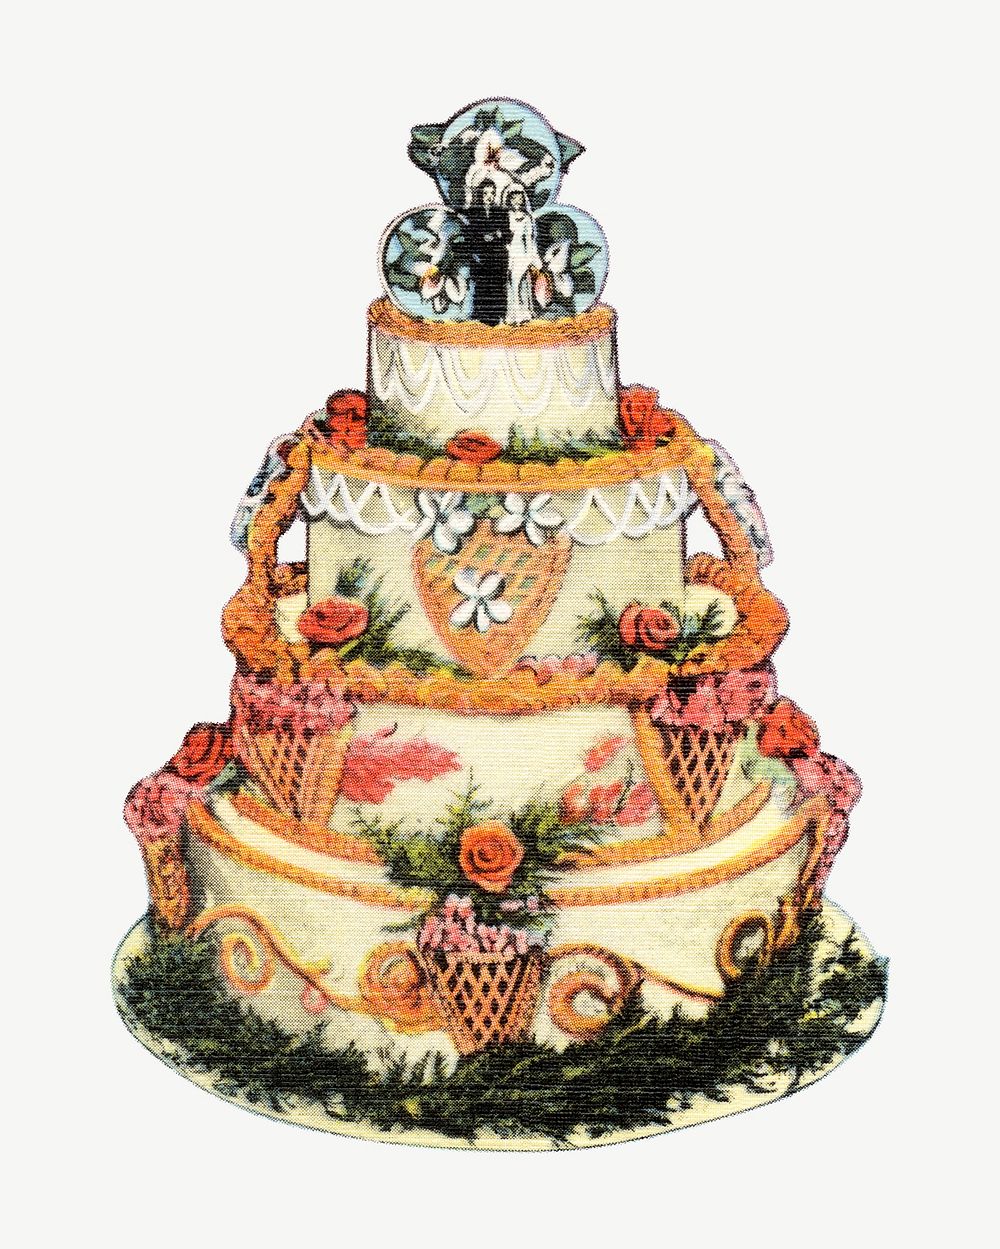 Vintage wedding cake, food illustration psd. Remixed by rawpixel.